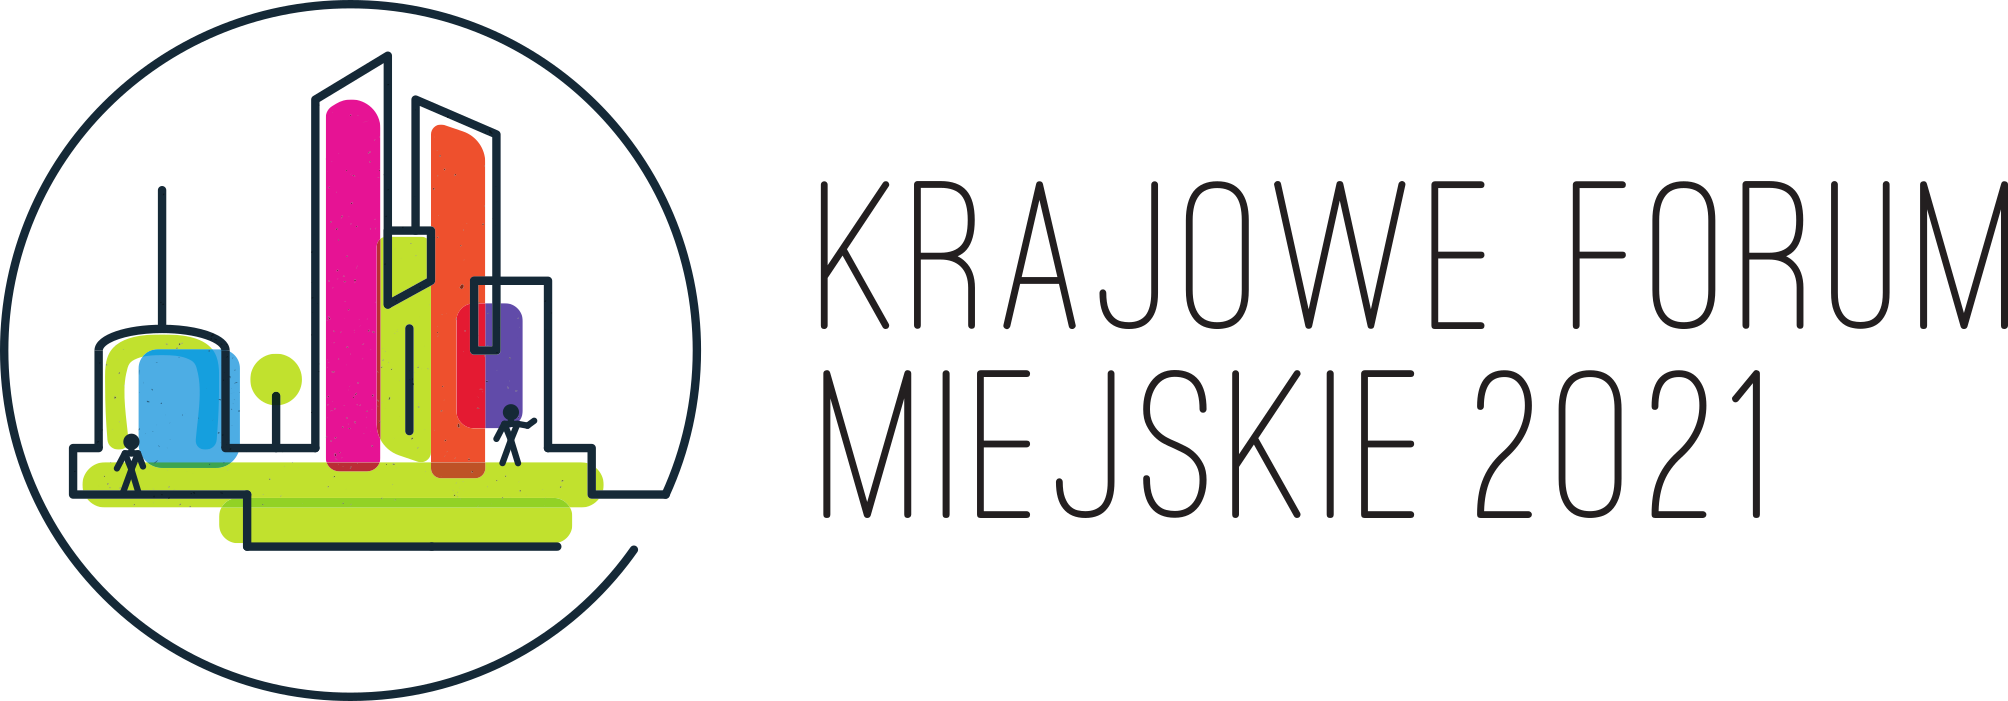 kfm logo